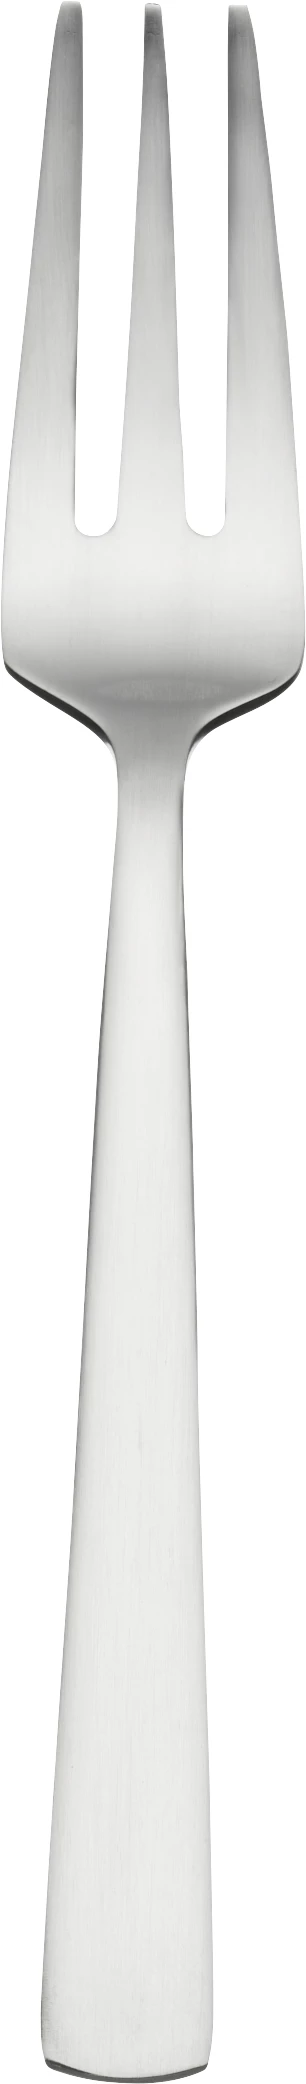 Amefa Ventura kagegaffel, 15,5 cm